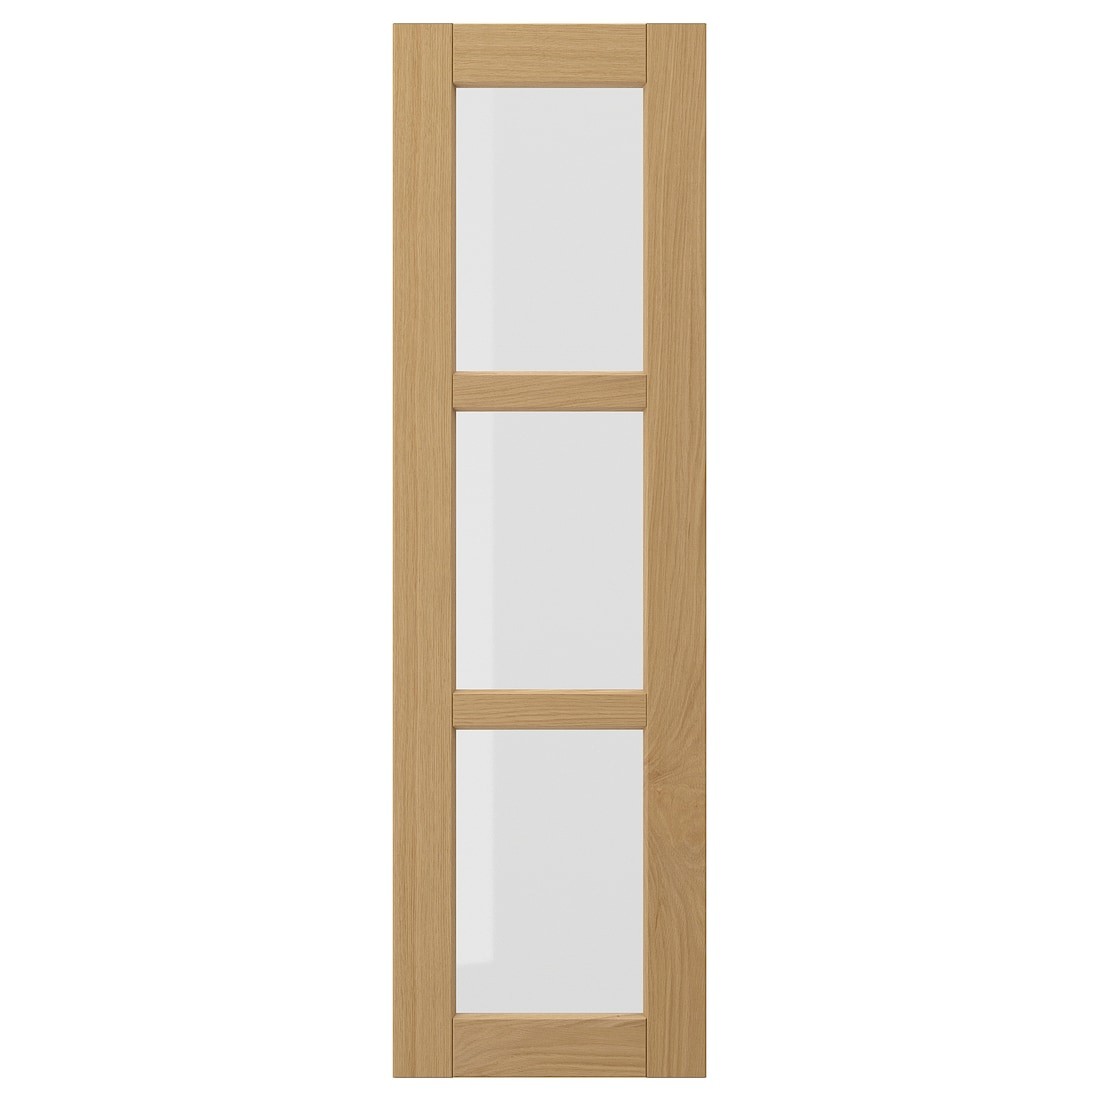 FORSBACKA Скляні двері, дуб, 30x100 см